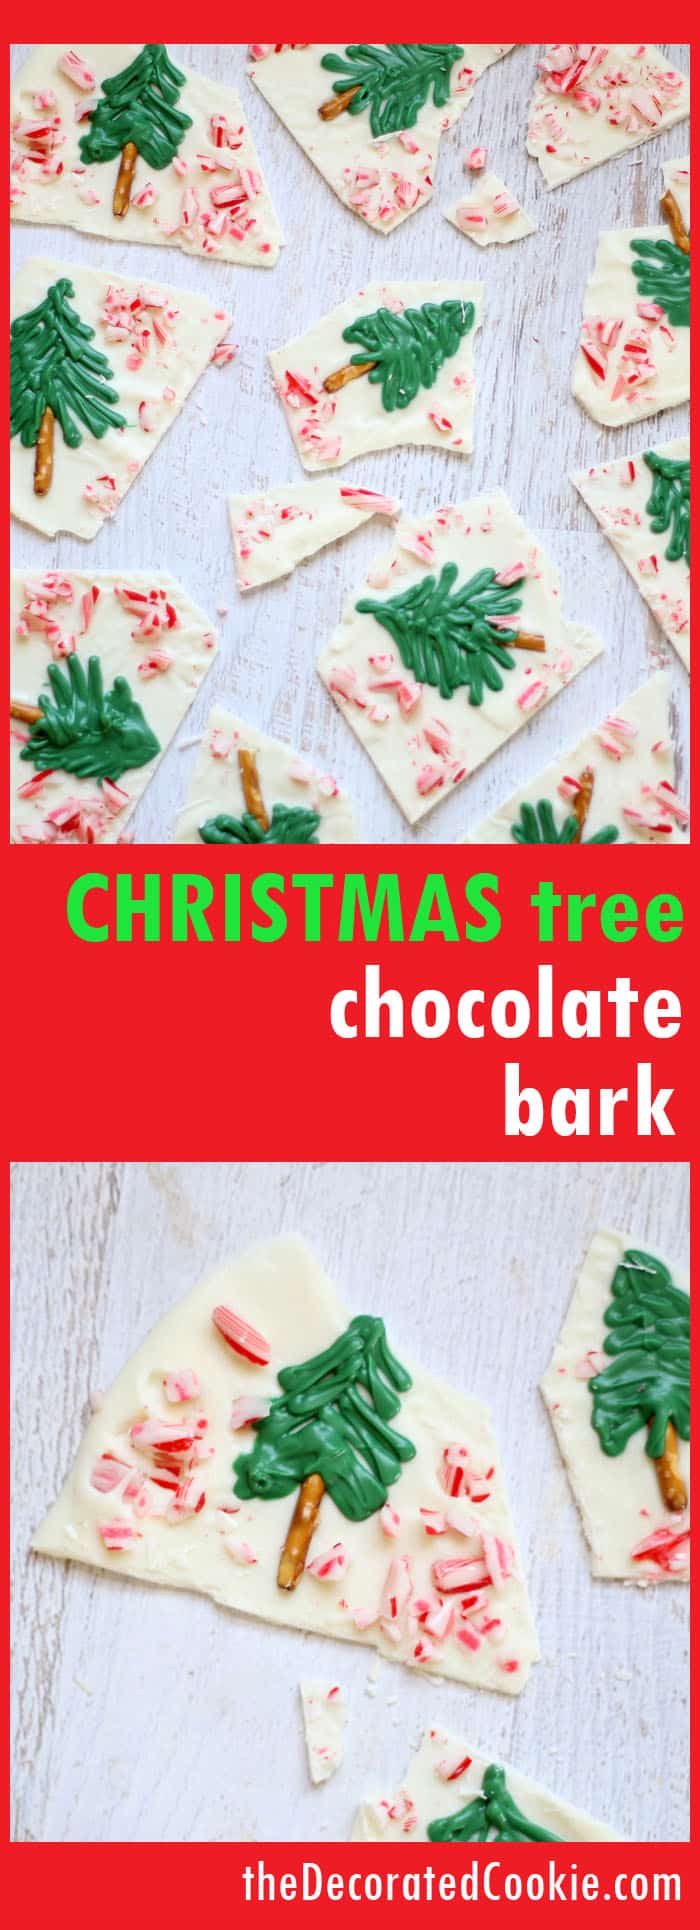 peppermint white chocolate Christmas tree bark for an easy dessert